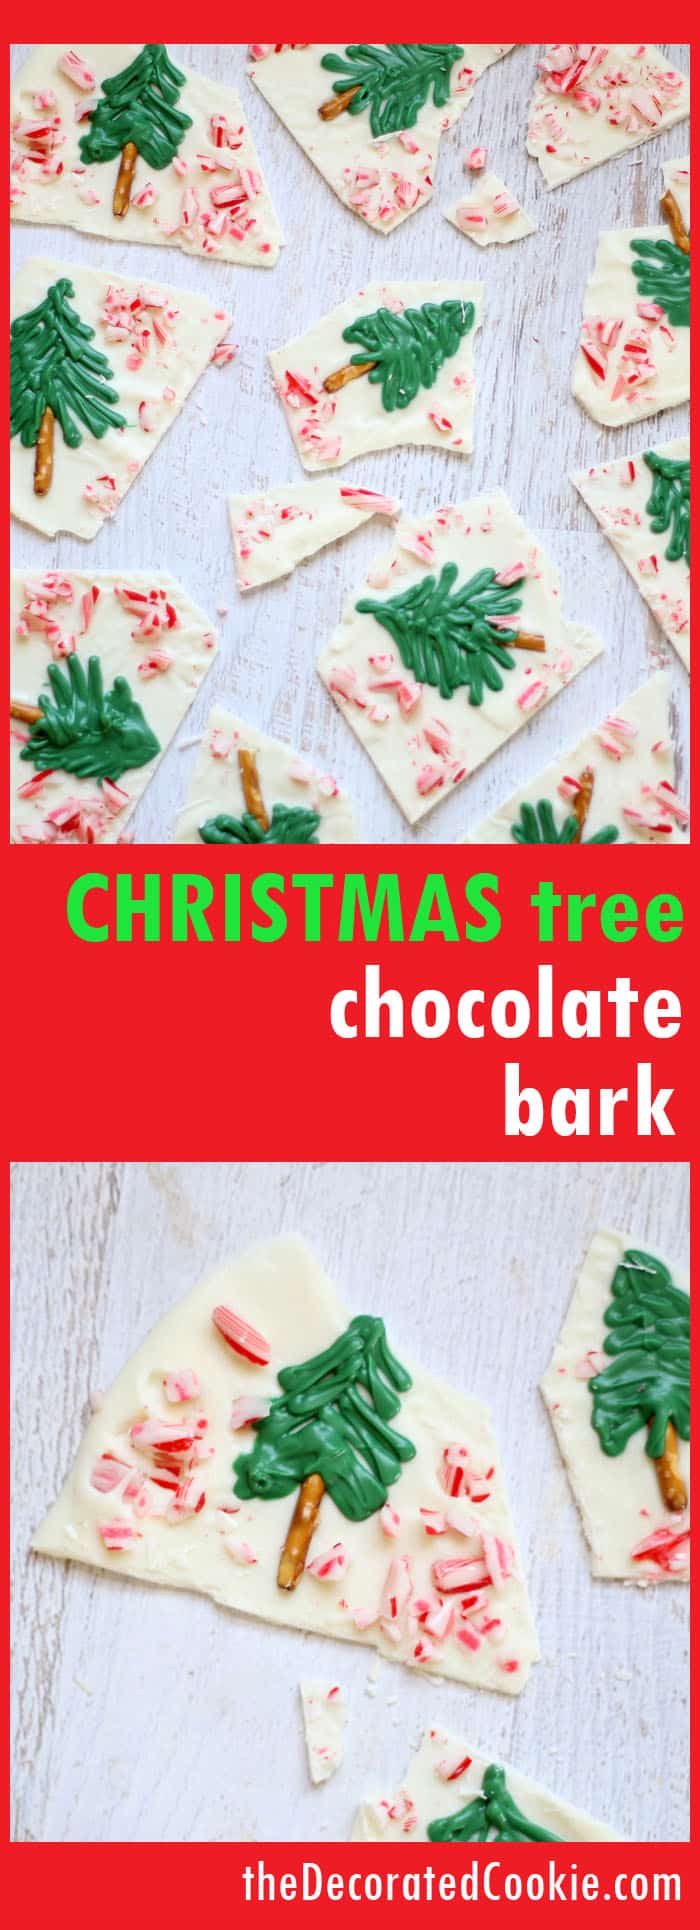 peppermint white chocolate Christmas tree bark for an easy dessert